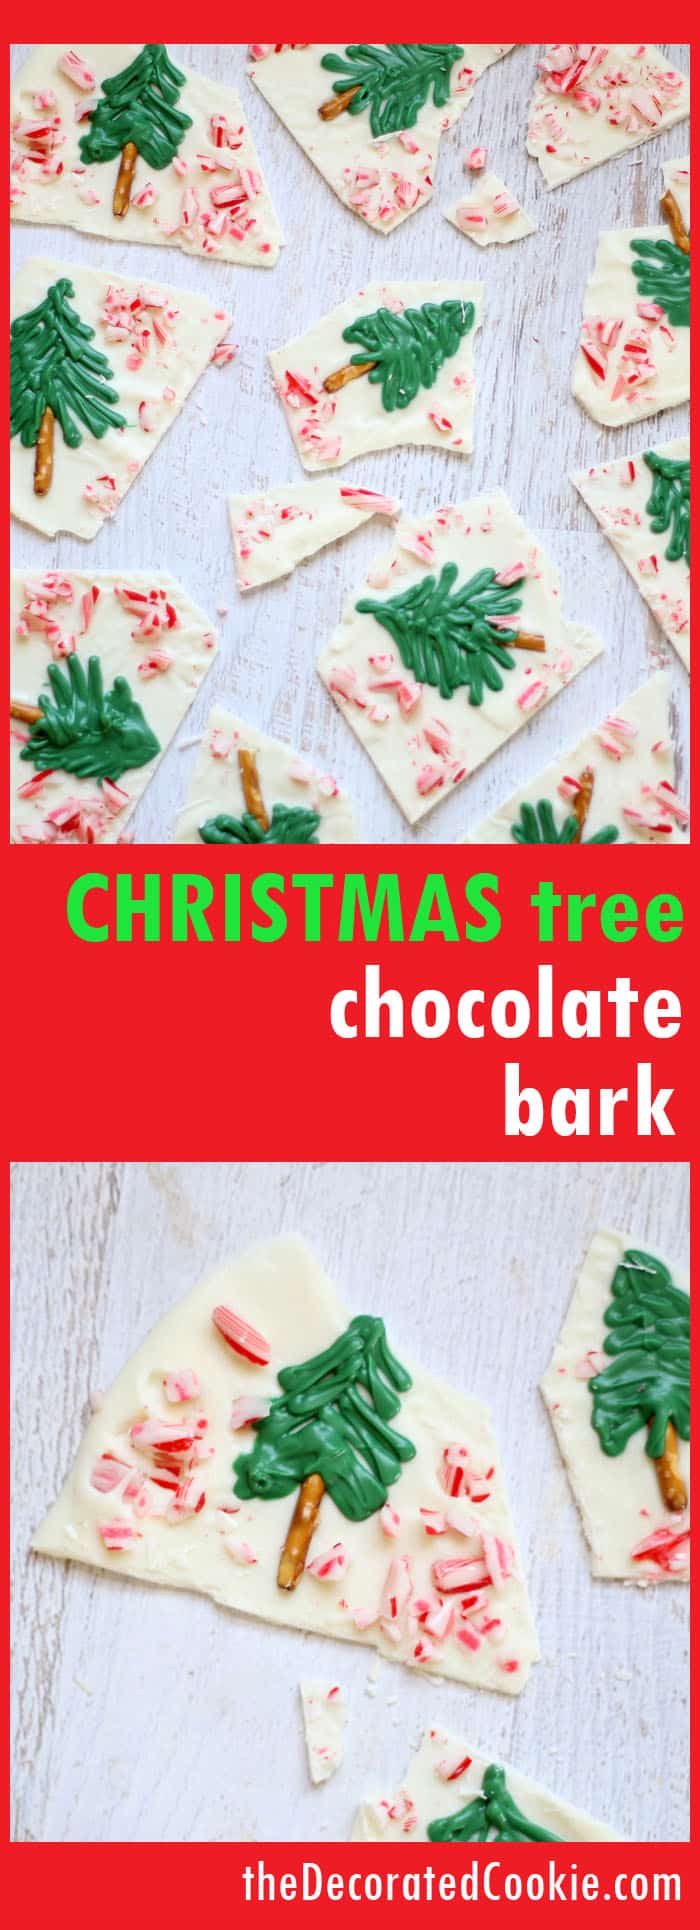 peppermint white chocolate Christmas tree bark for an easy dessert